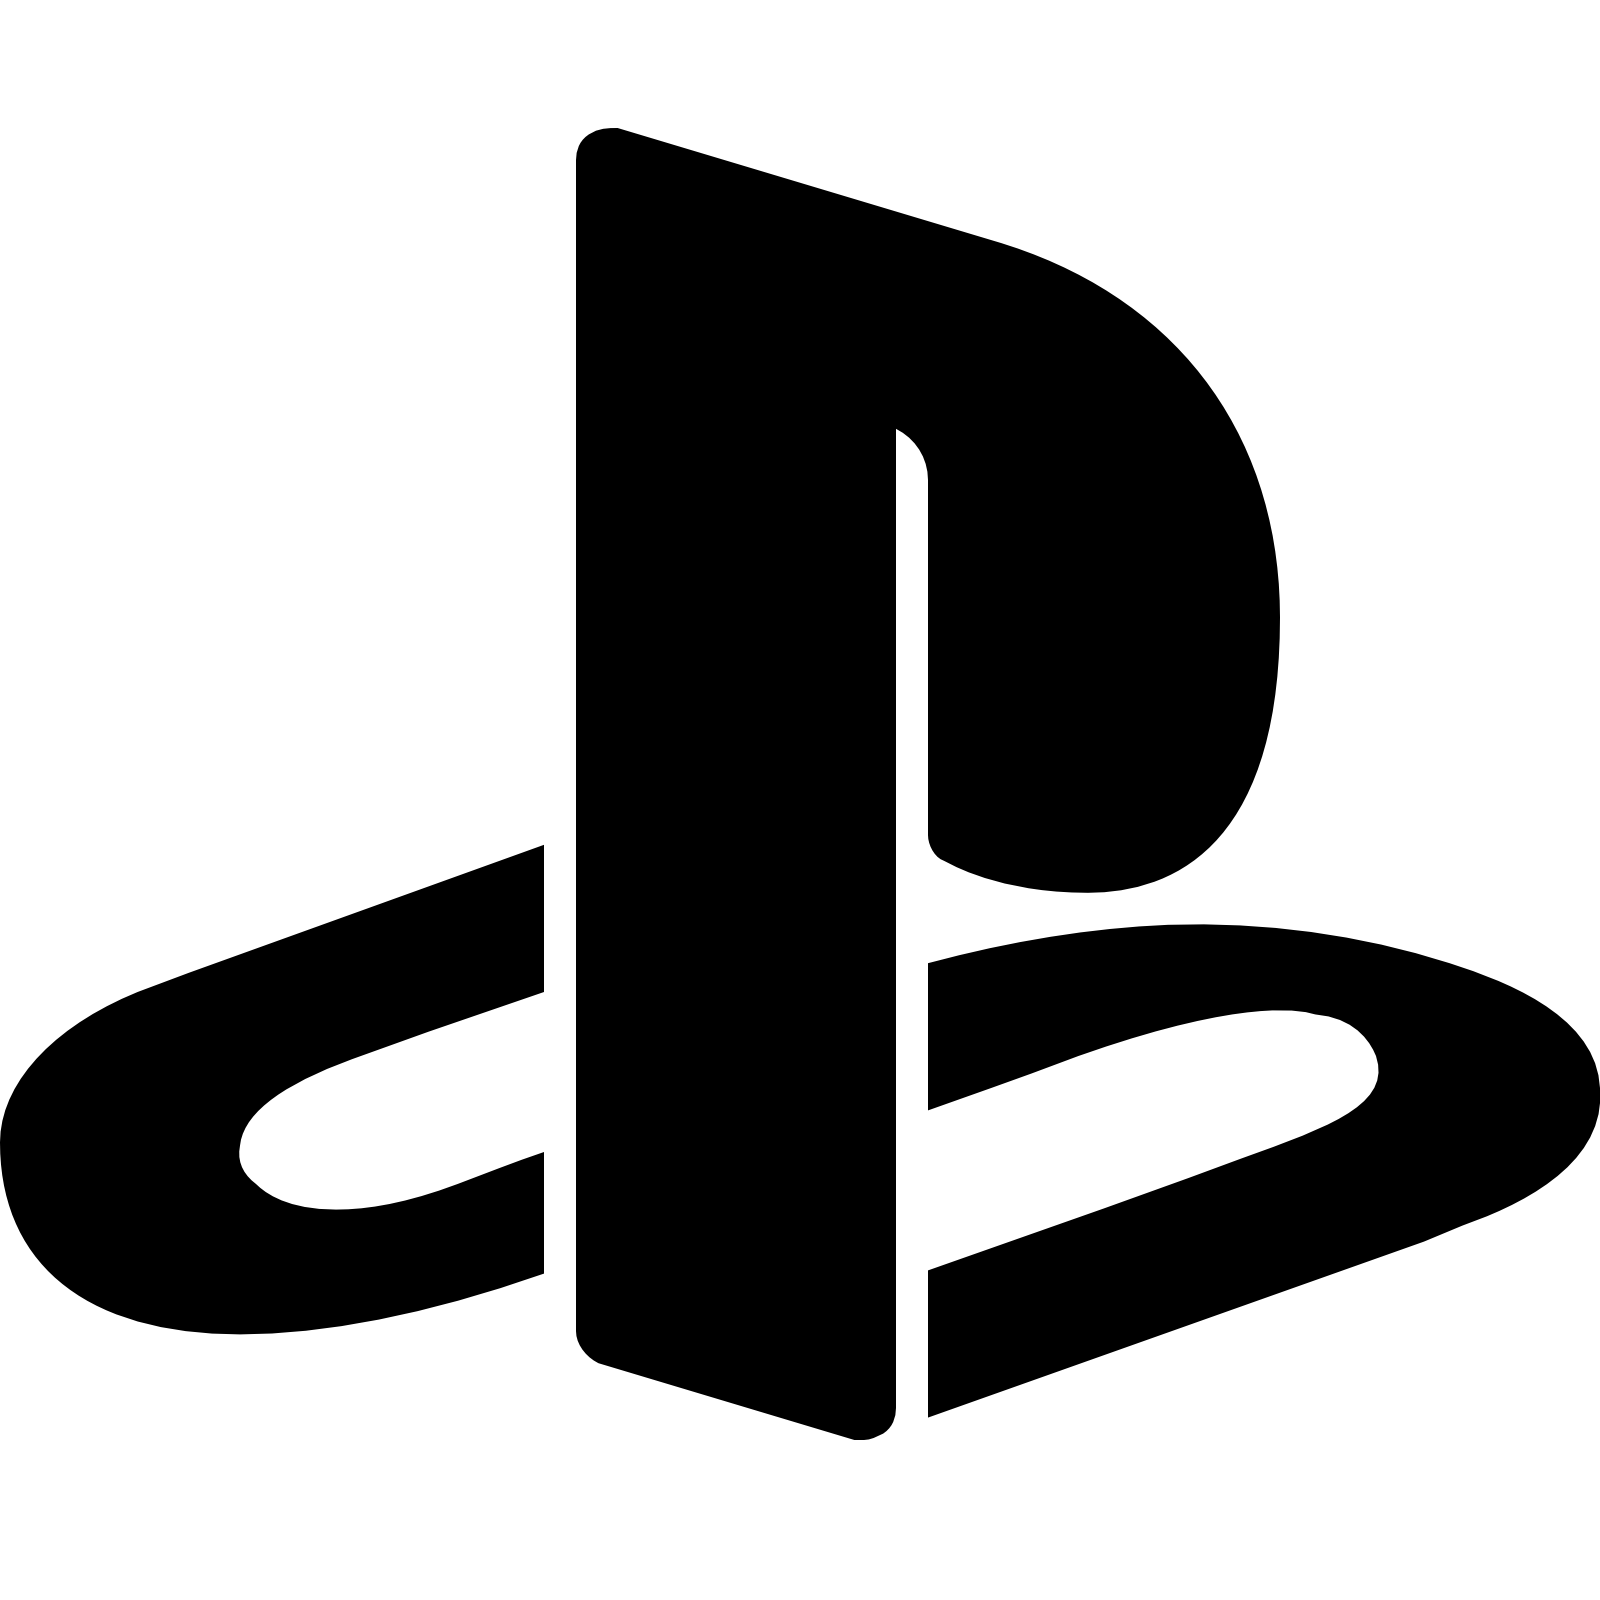 Playstation icon. Значок ps4. Логотип плейстейшен 4. PLAYSTATION logo PNG. Ps4 PLAYSTATION значки.